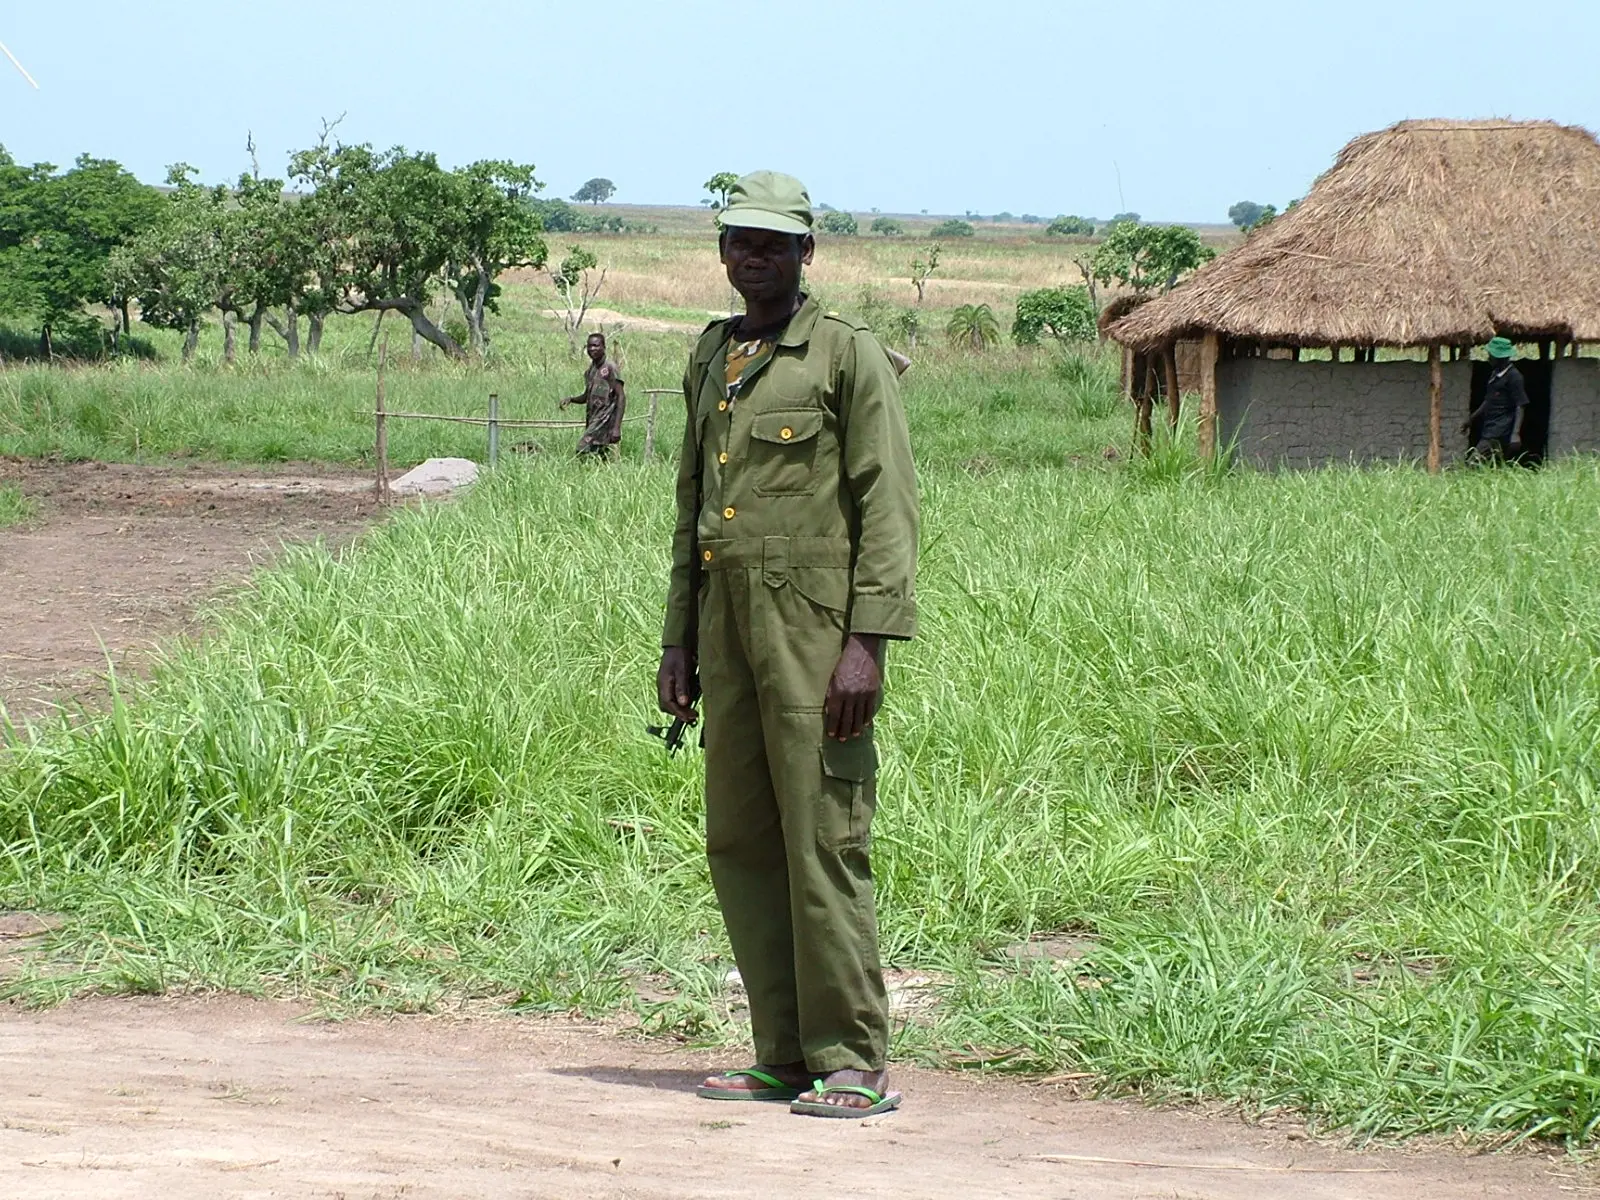 Ranger in Garamba National Park, Zaire